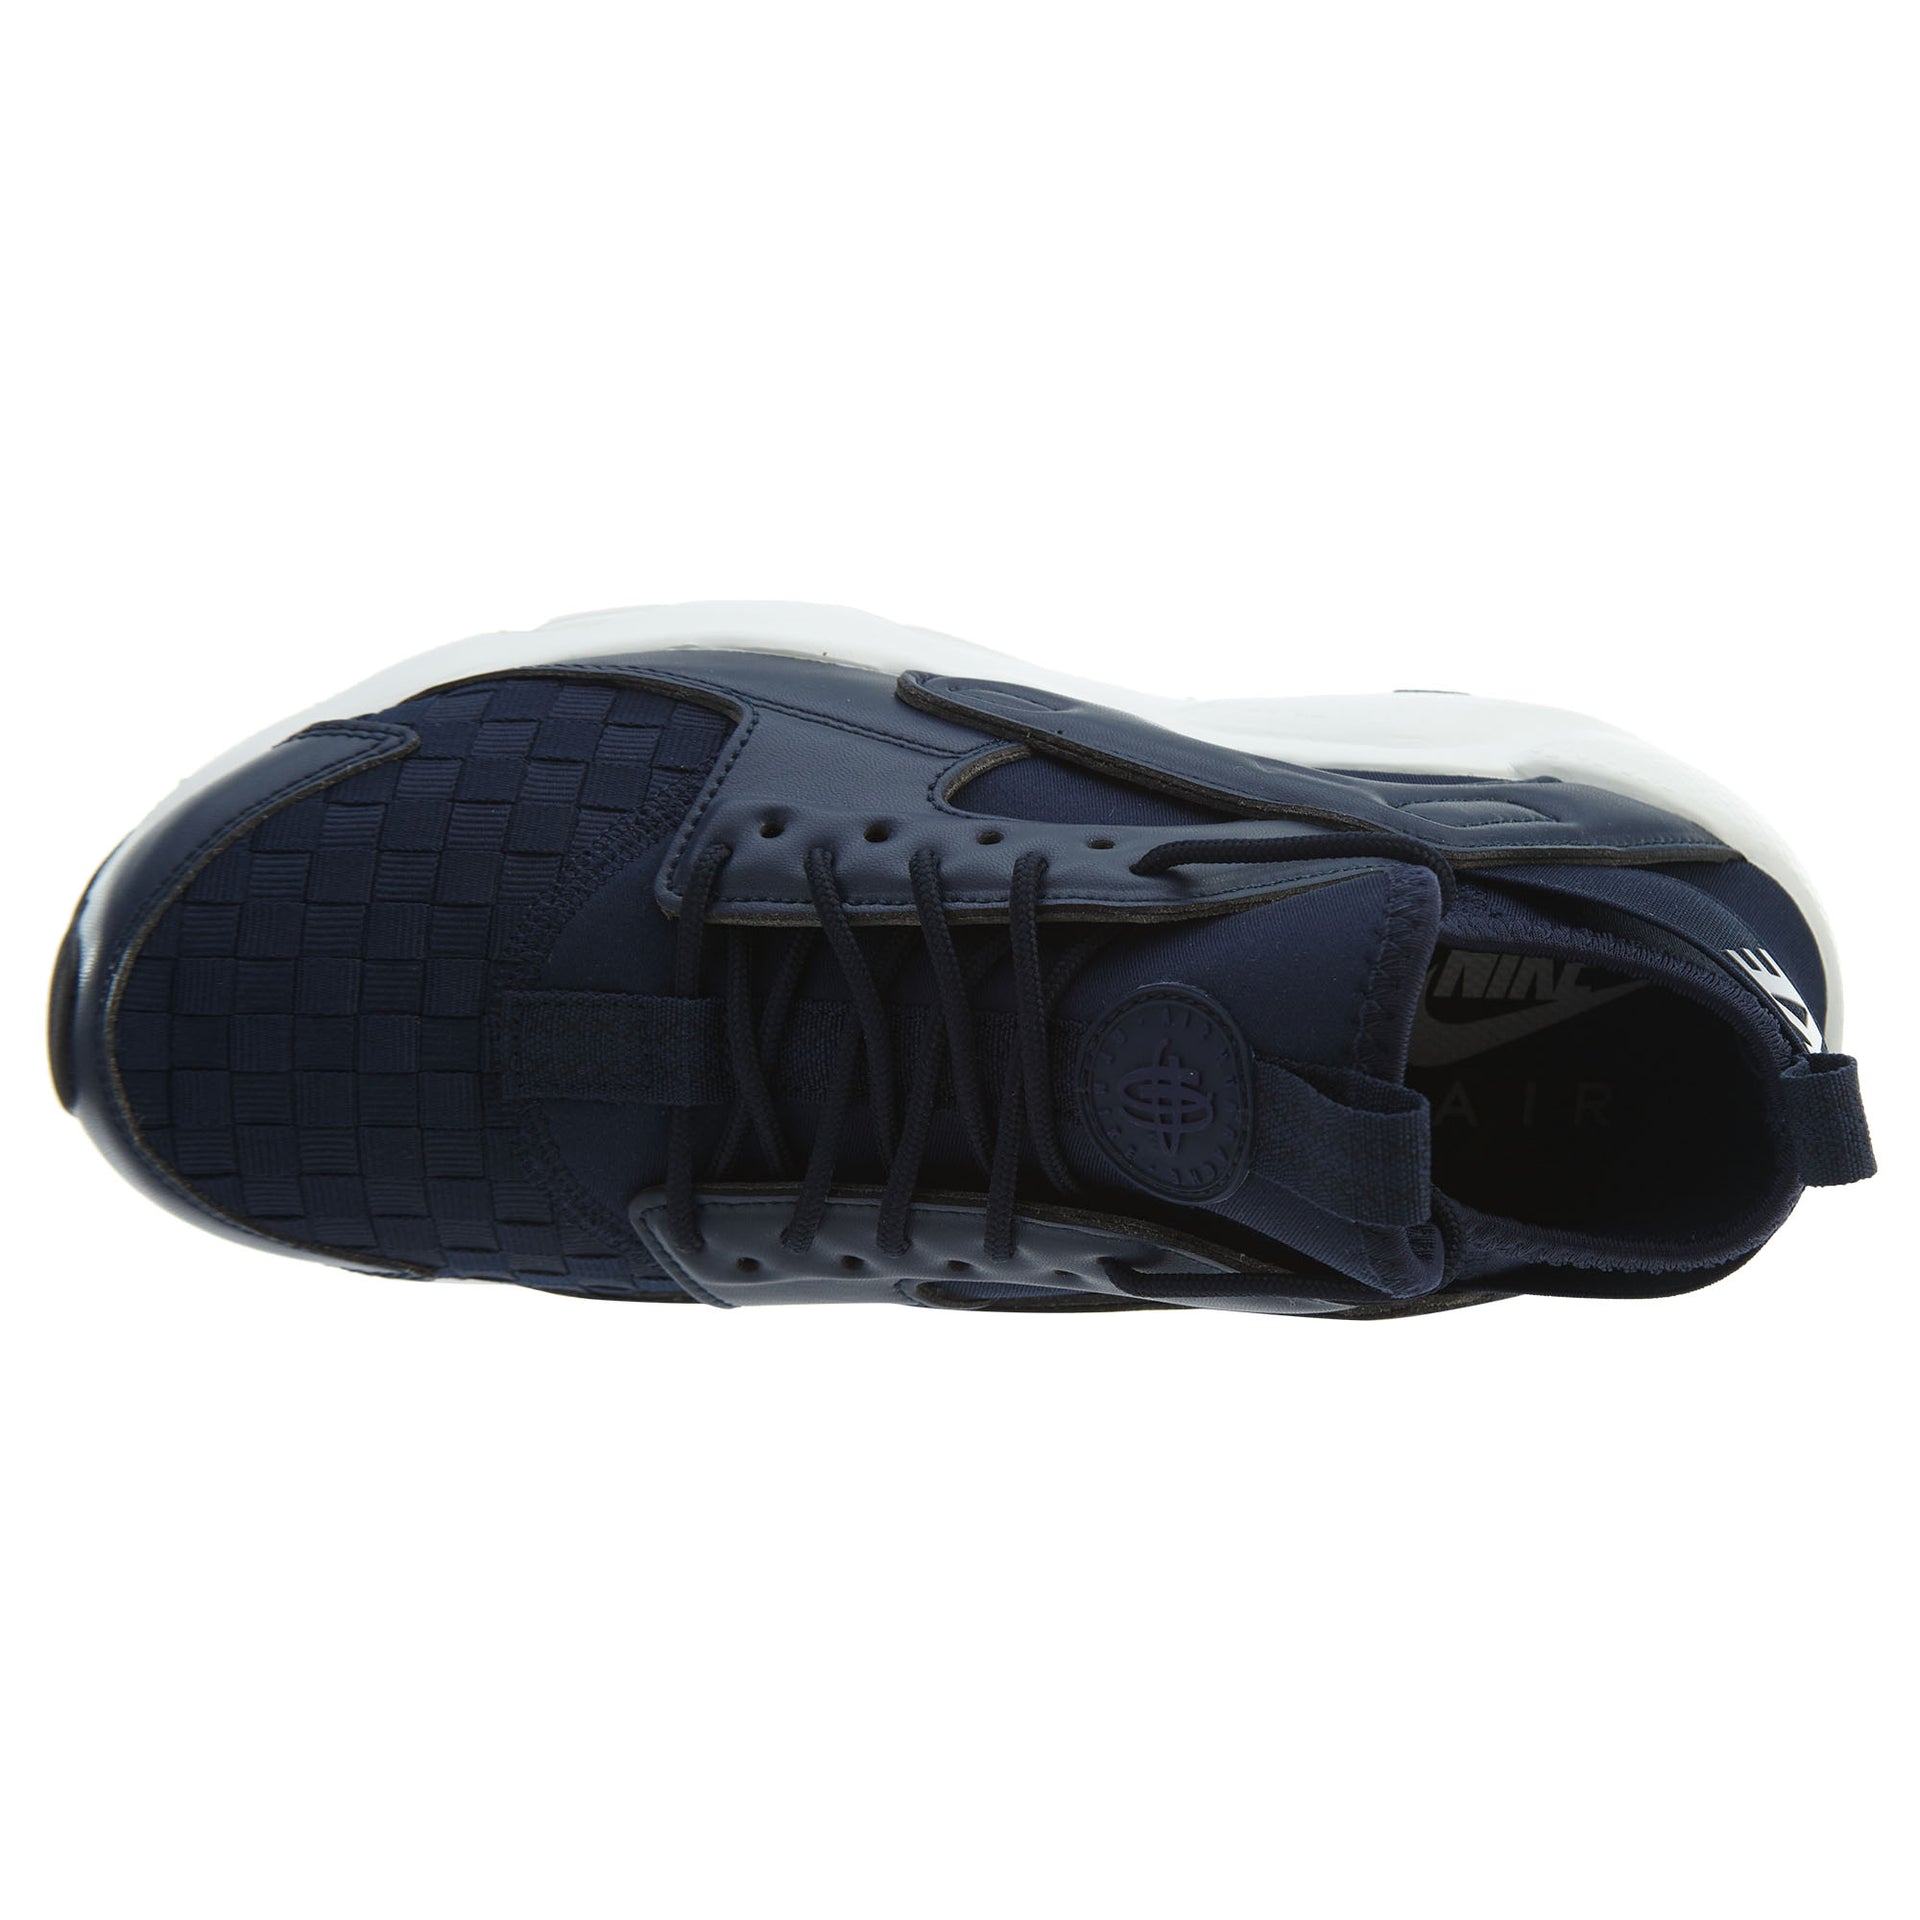 Nike Air Huarache Run Ultra SE Obsidian Mens Style :875841